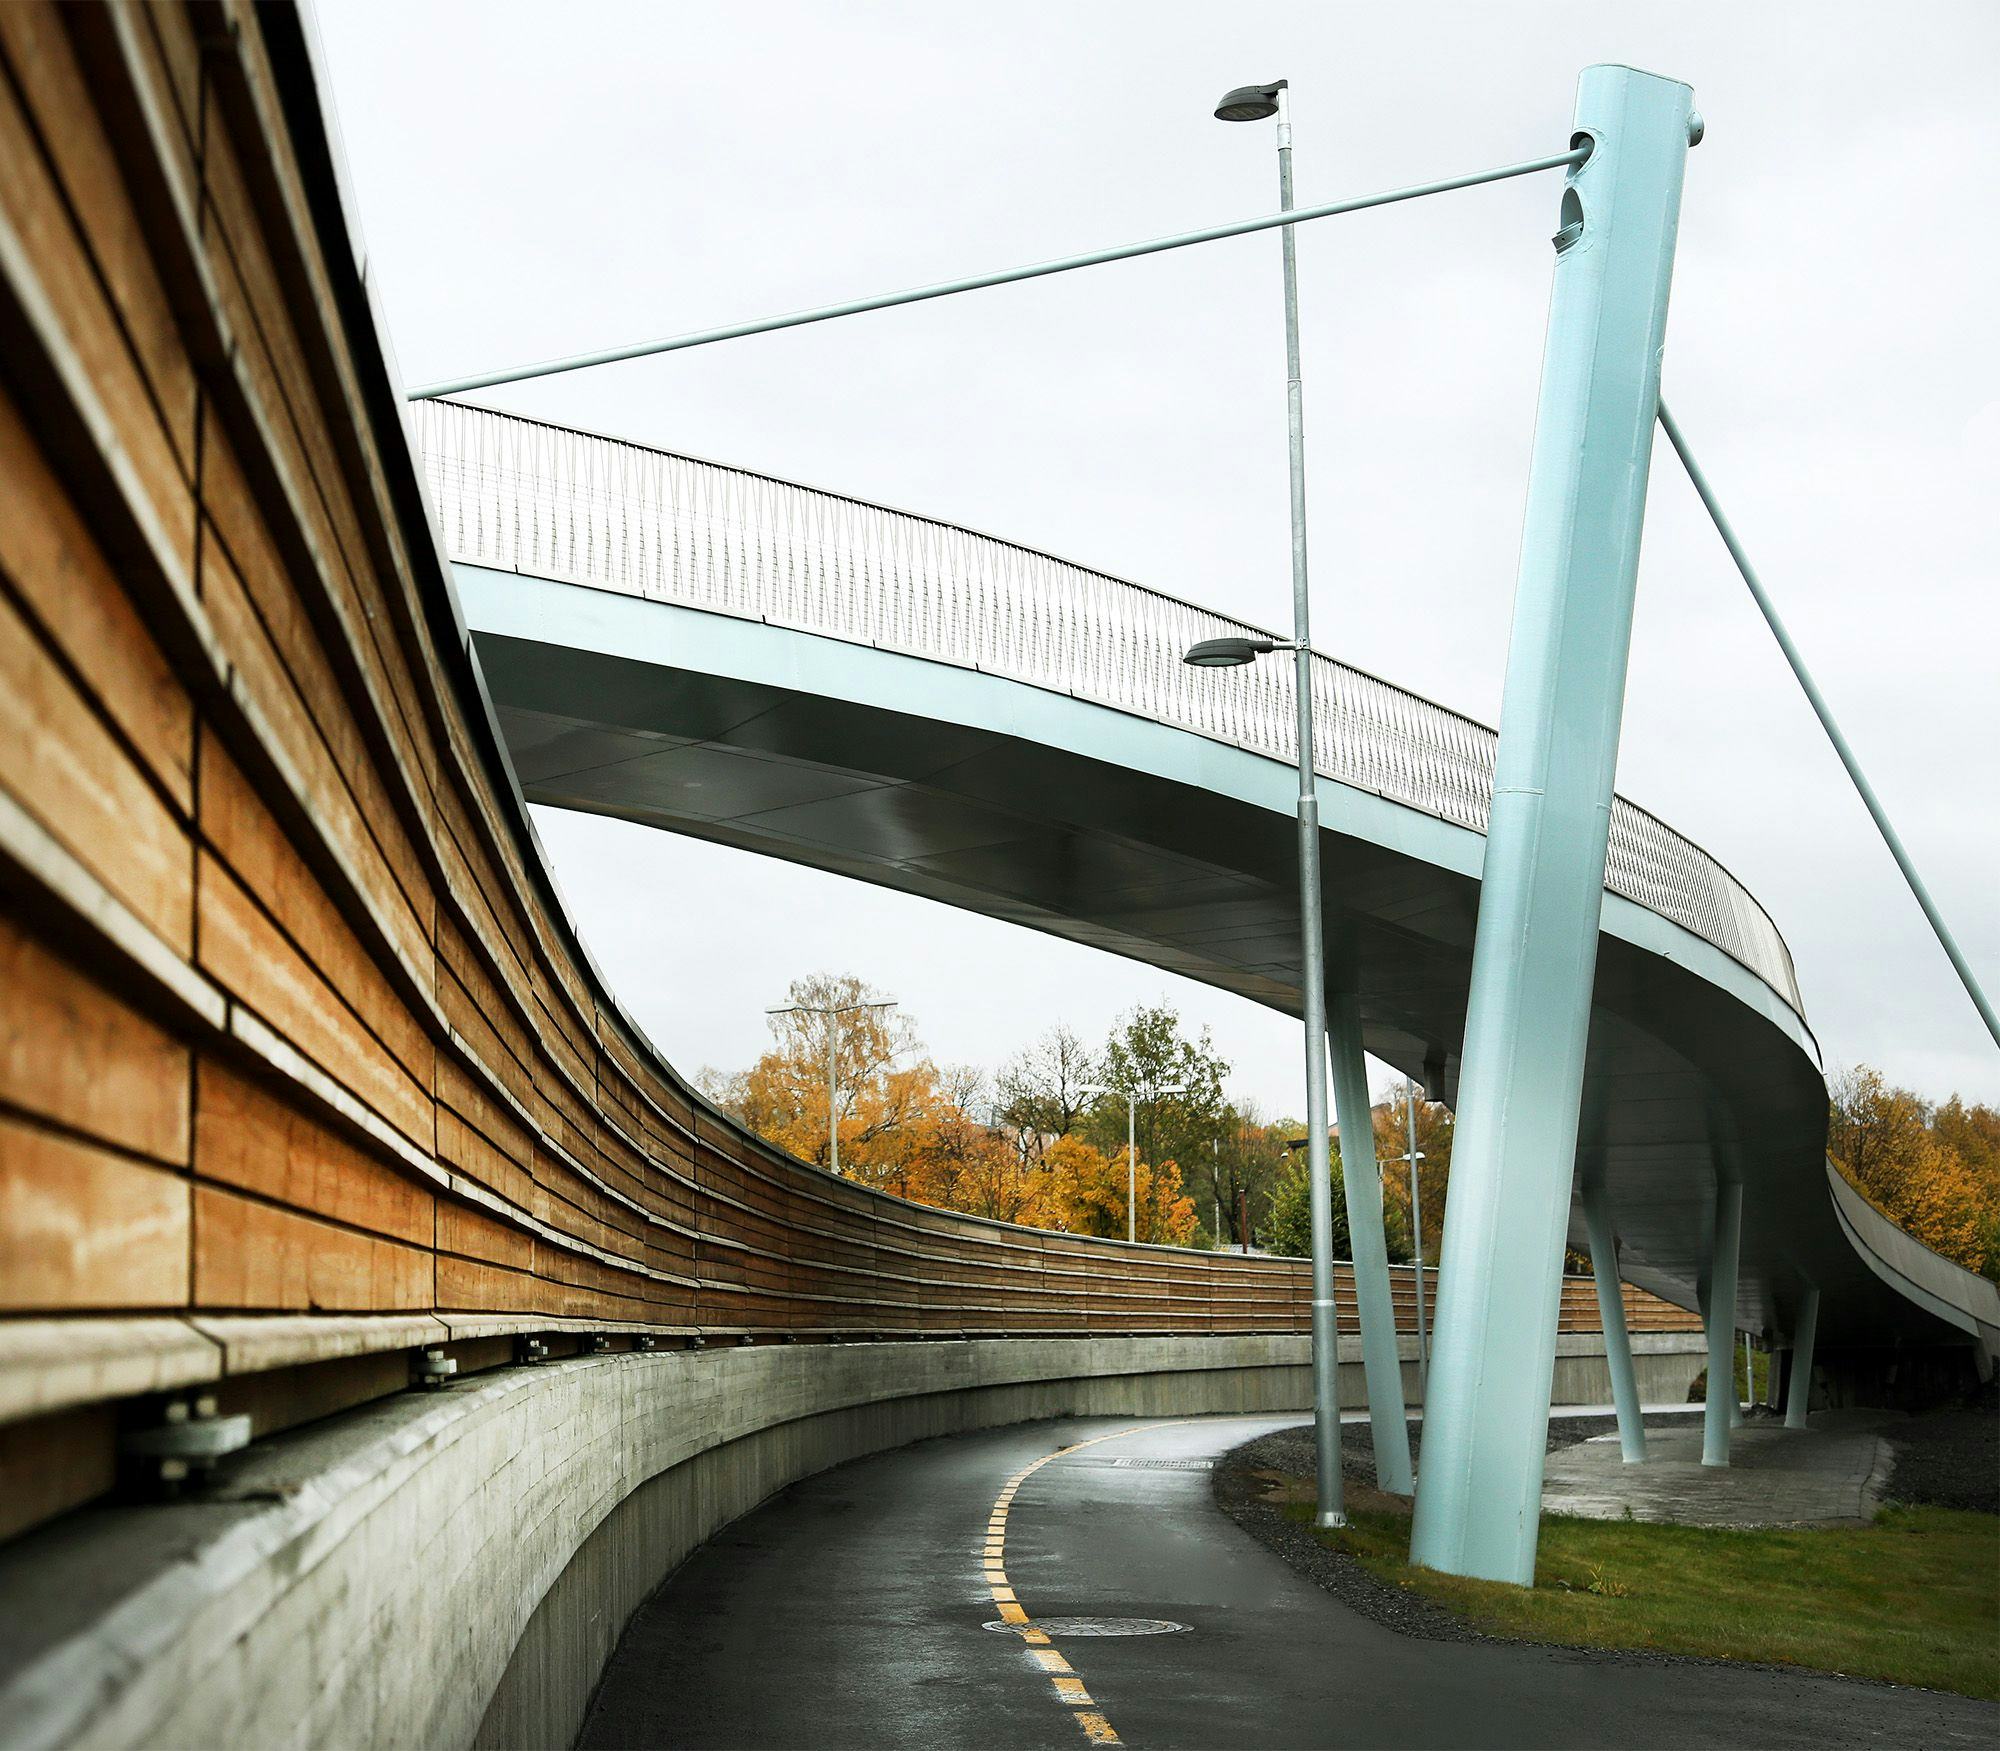 A concrete pedestrian bridge and a walking path with wooden rails